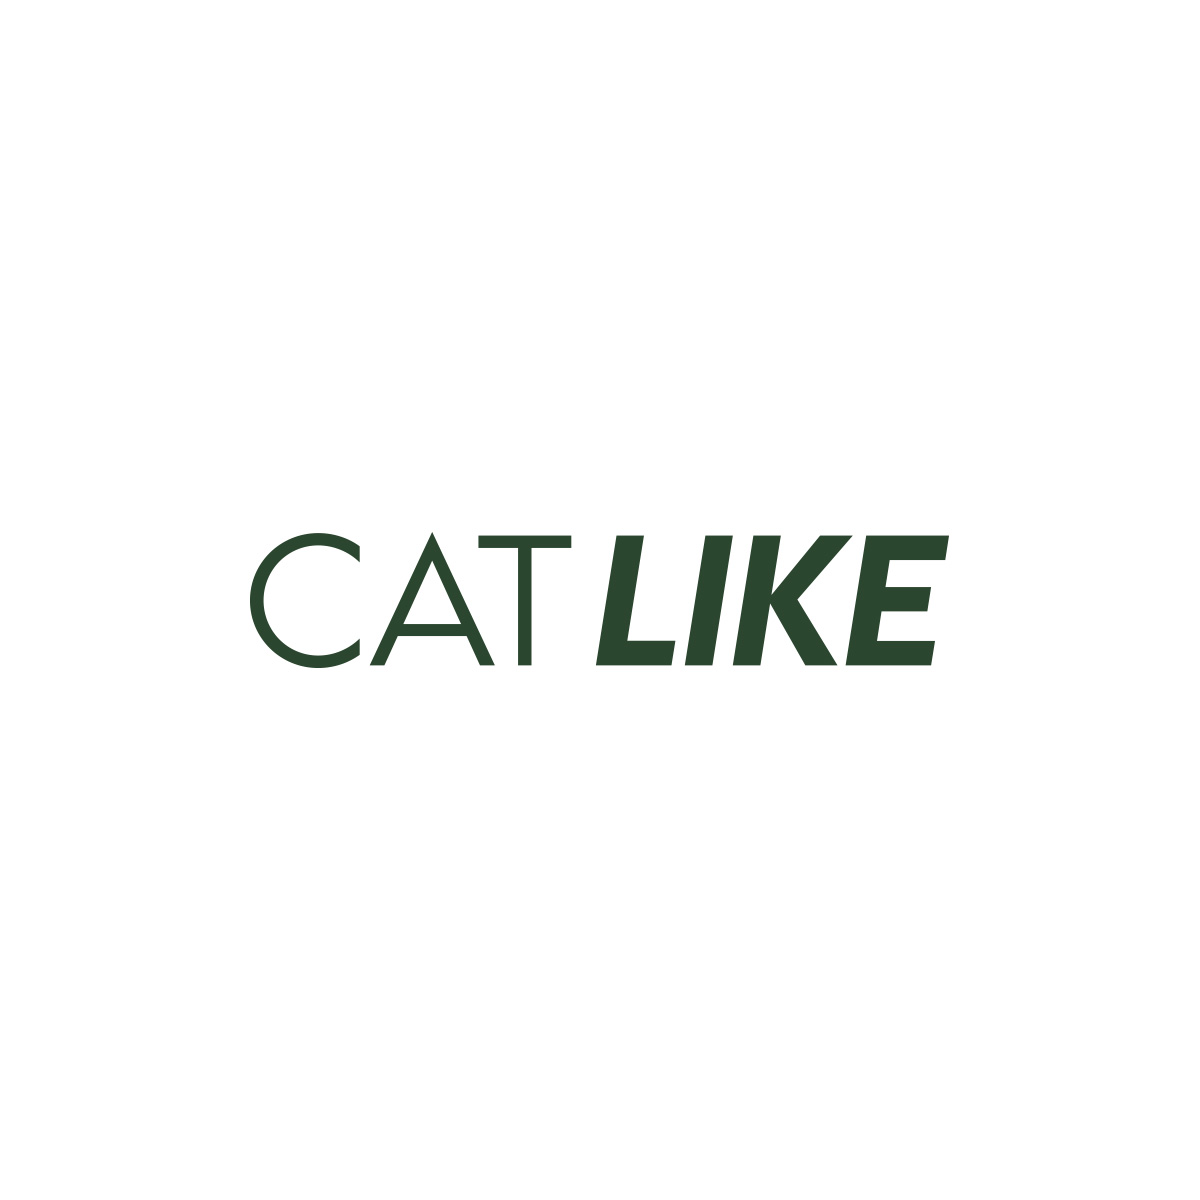 Catlike